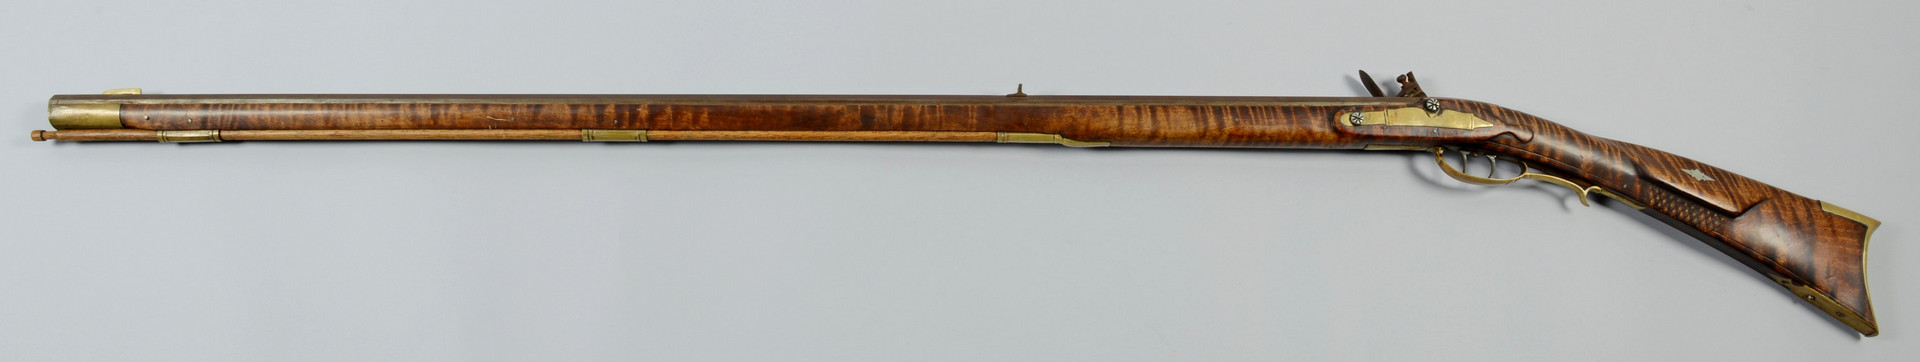 Lot 402: L. R. Turpin Flintlock Long Rifle